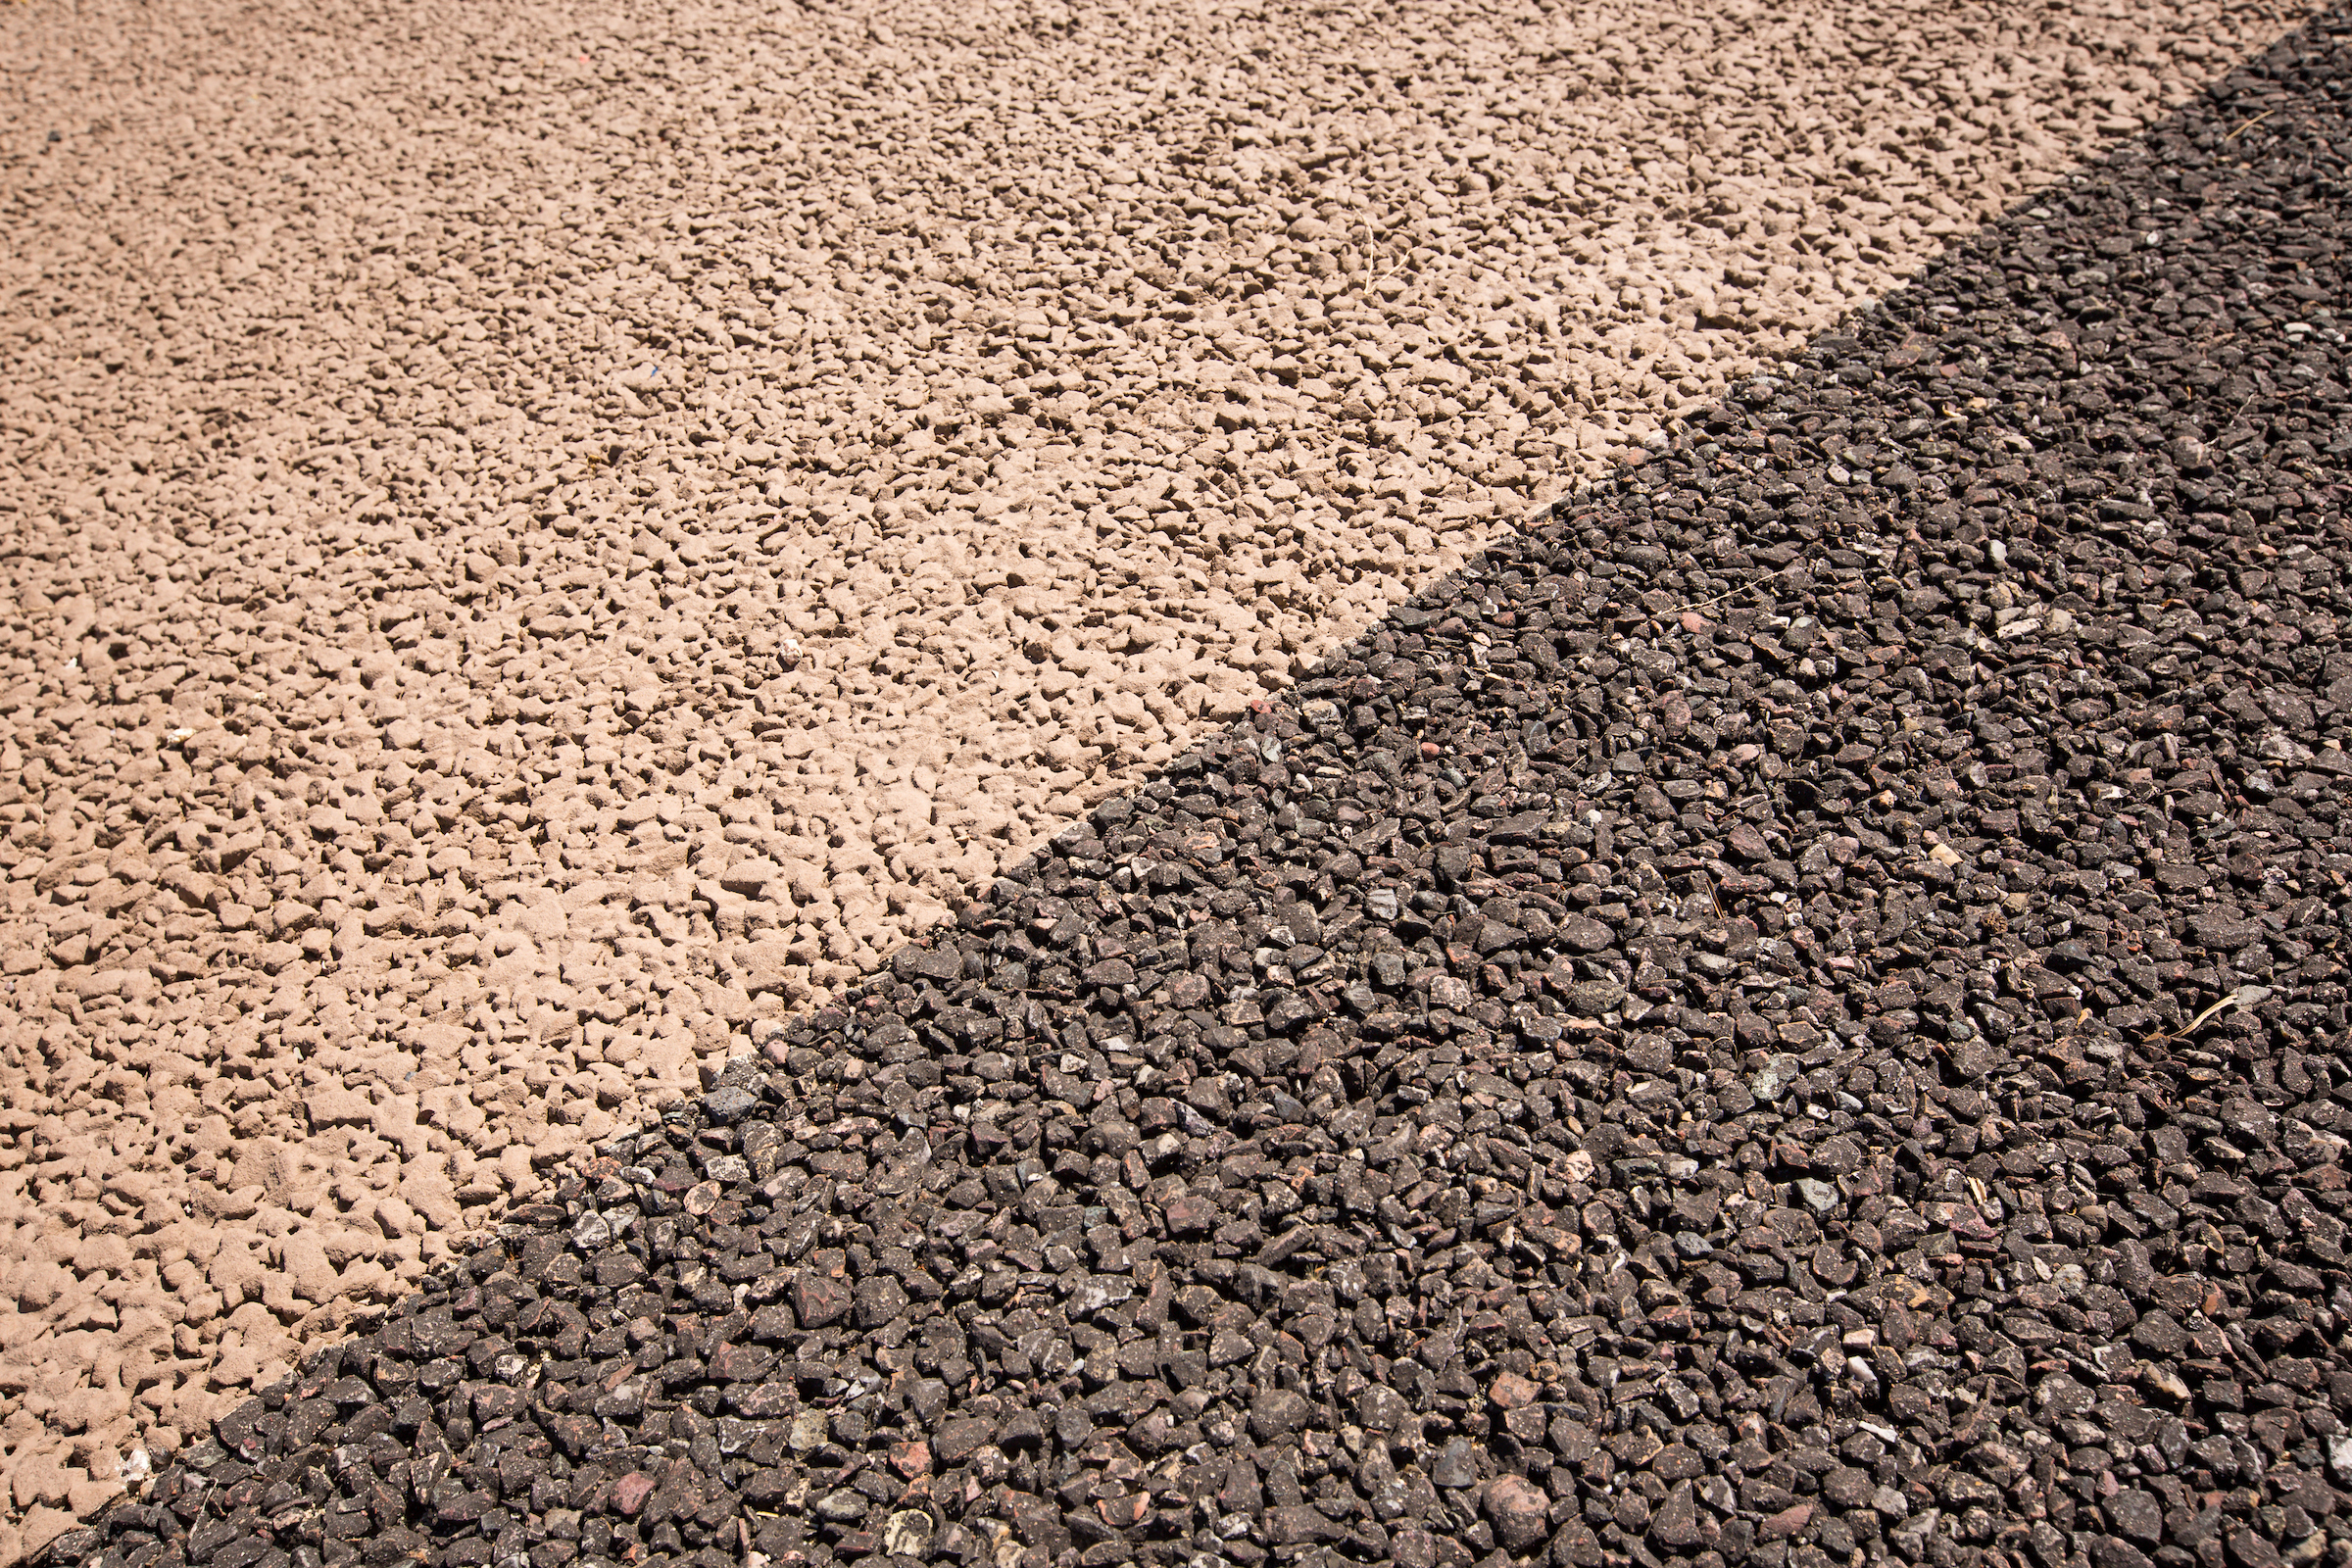 Porous asphalt